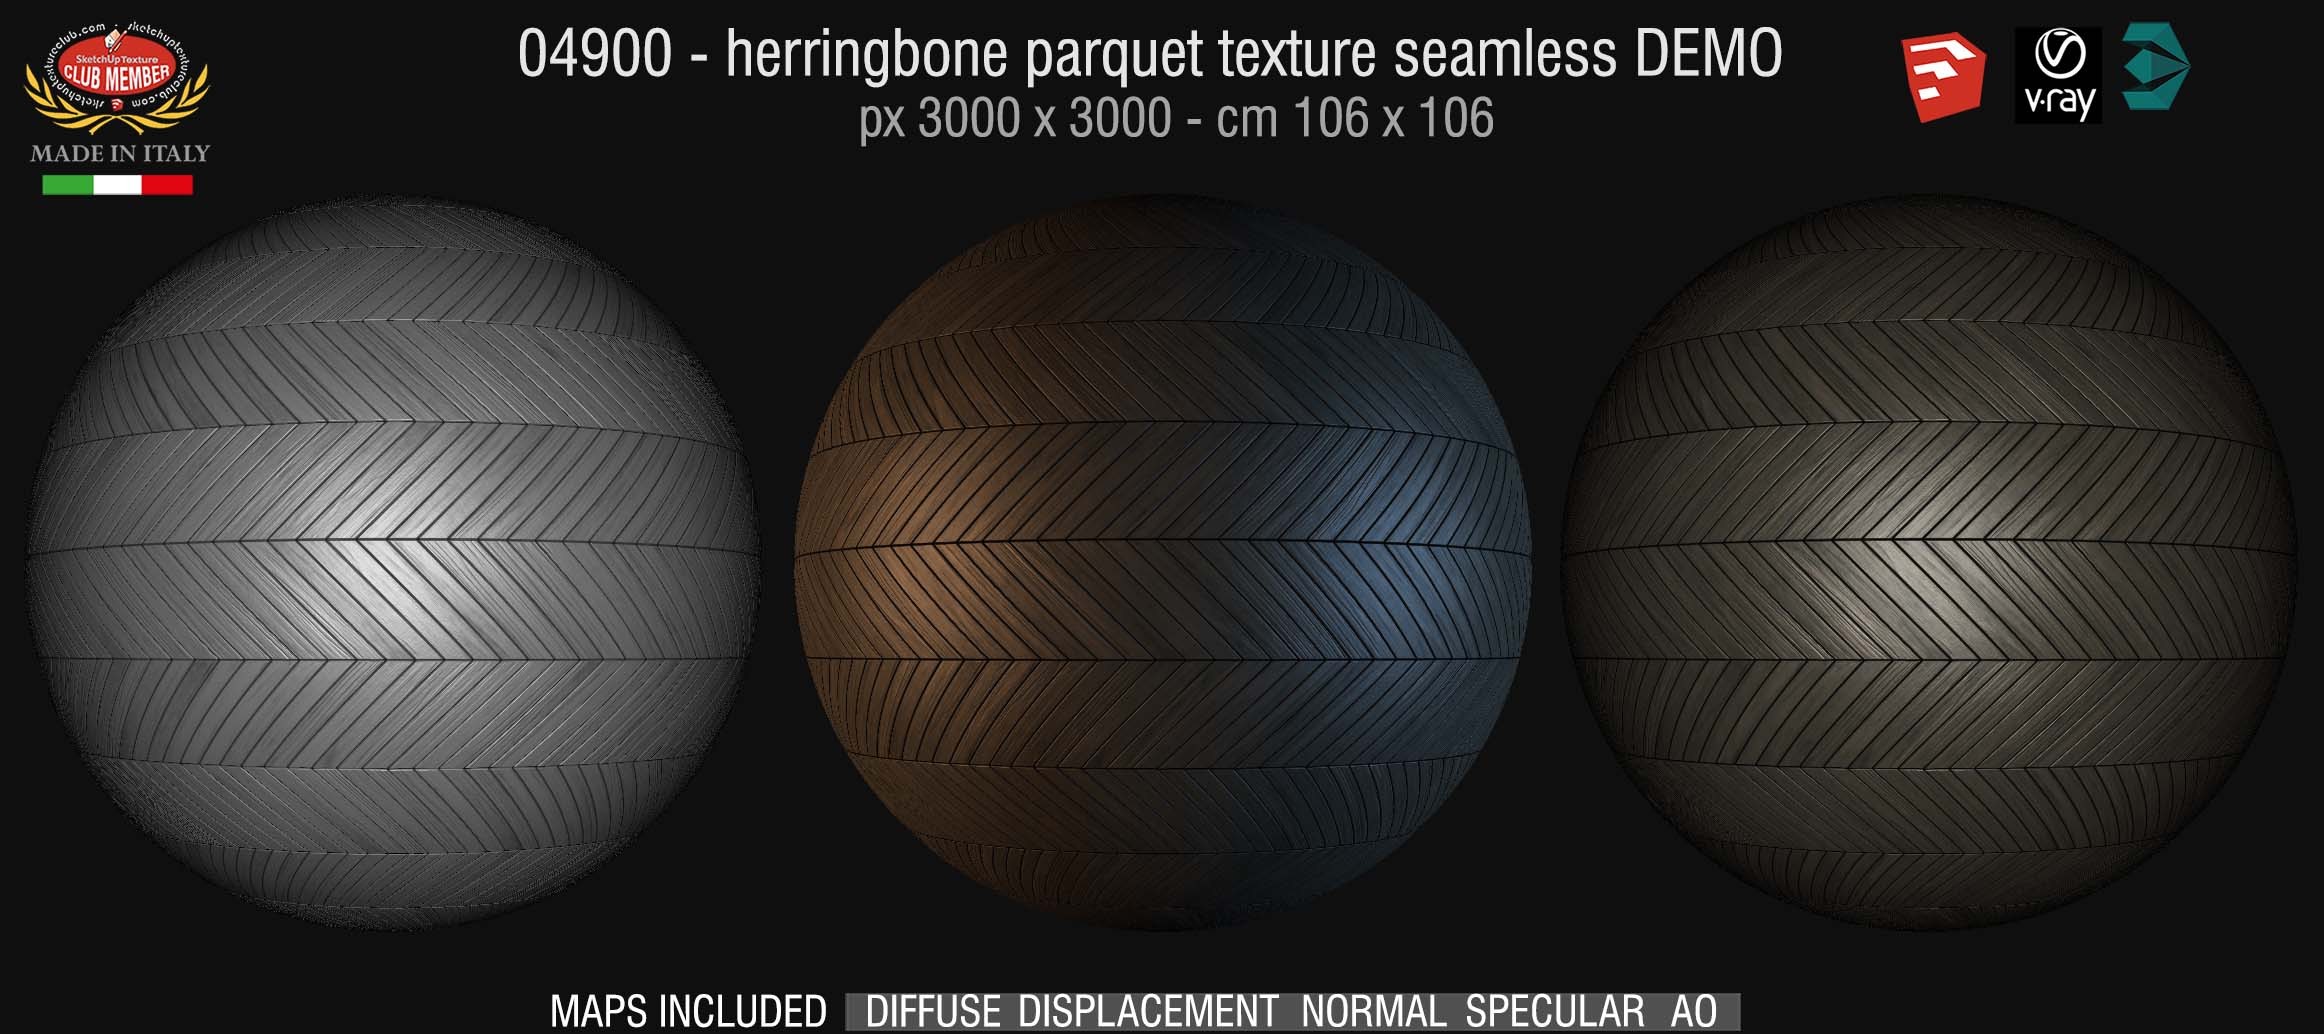 04900 HR Herringbone parquet texture seamless + maps DEMO